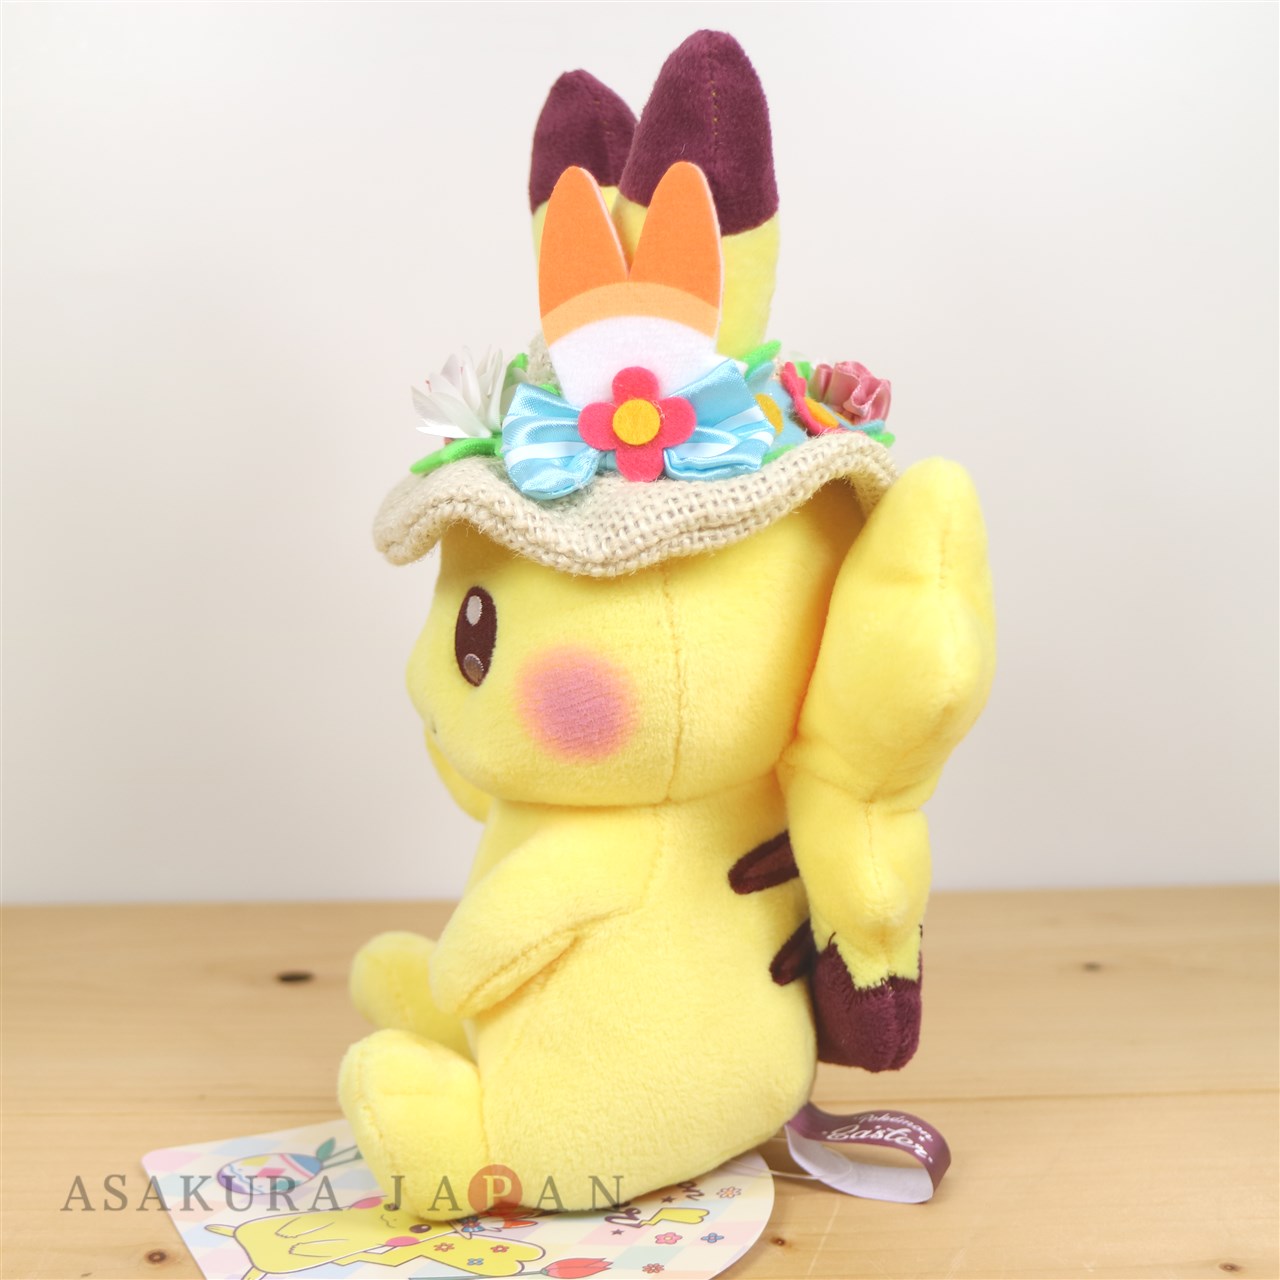 Details about   Pokemon Center Original EASTER 2020 Plush Doll Pikachu 